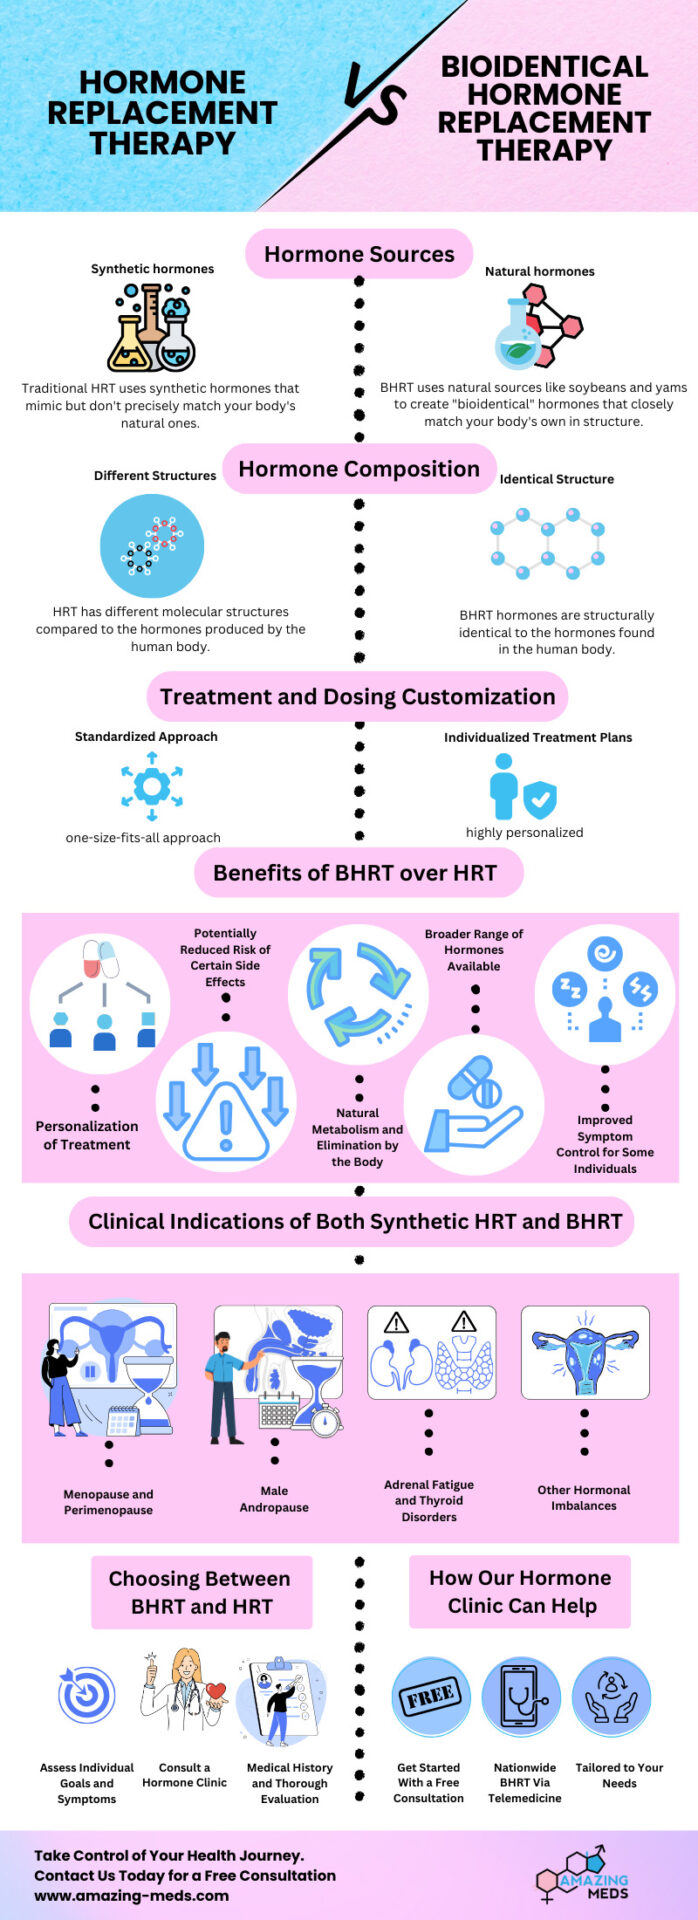 HRT vs BHRT